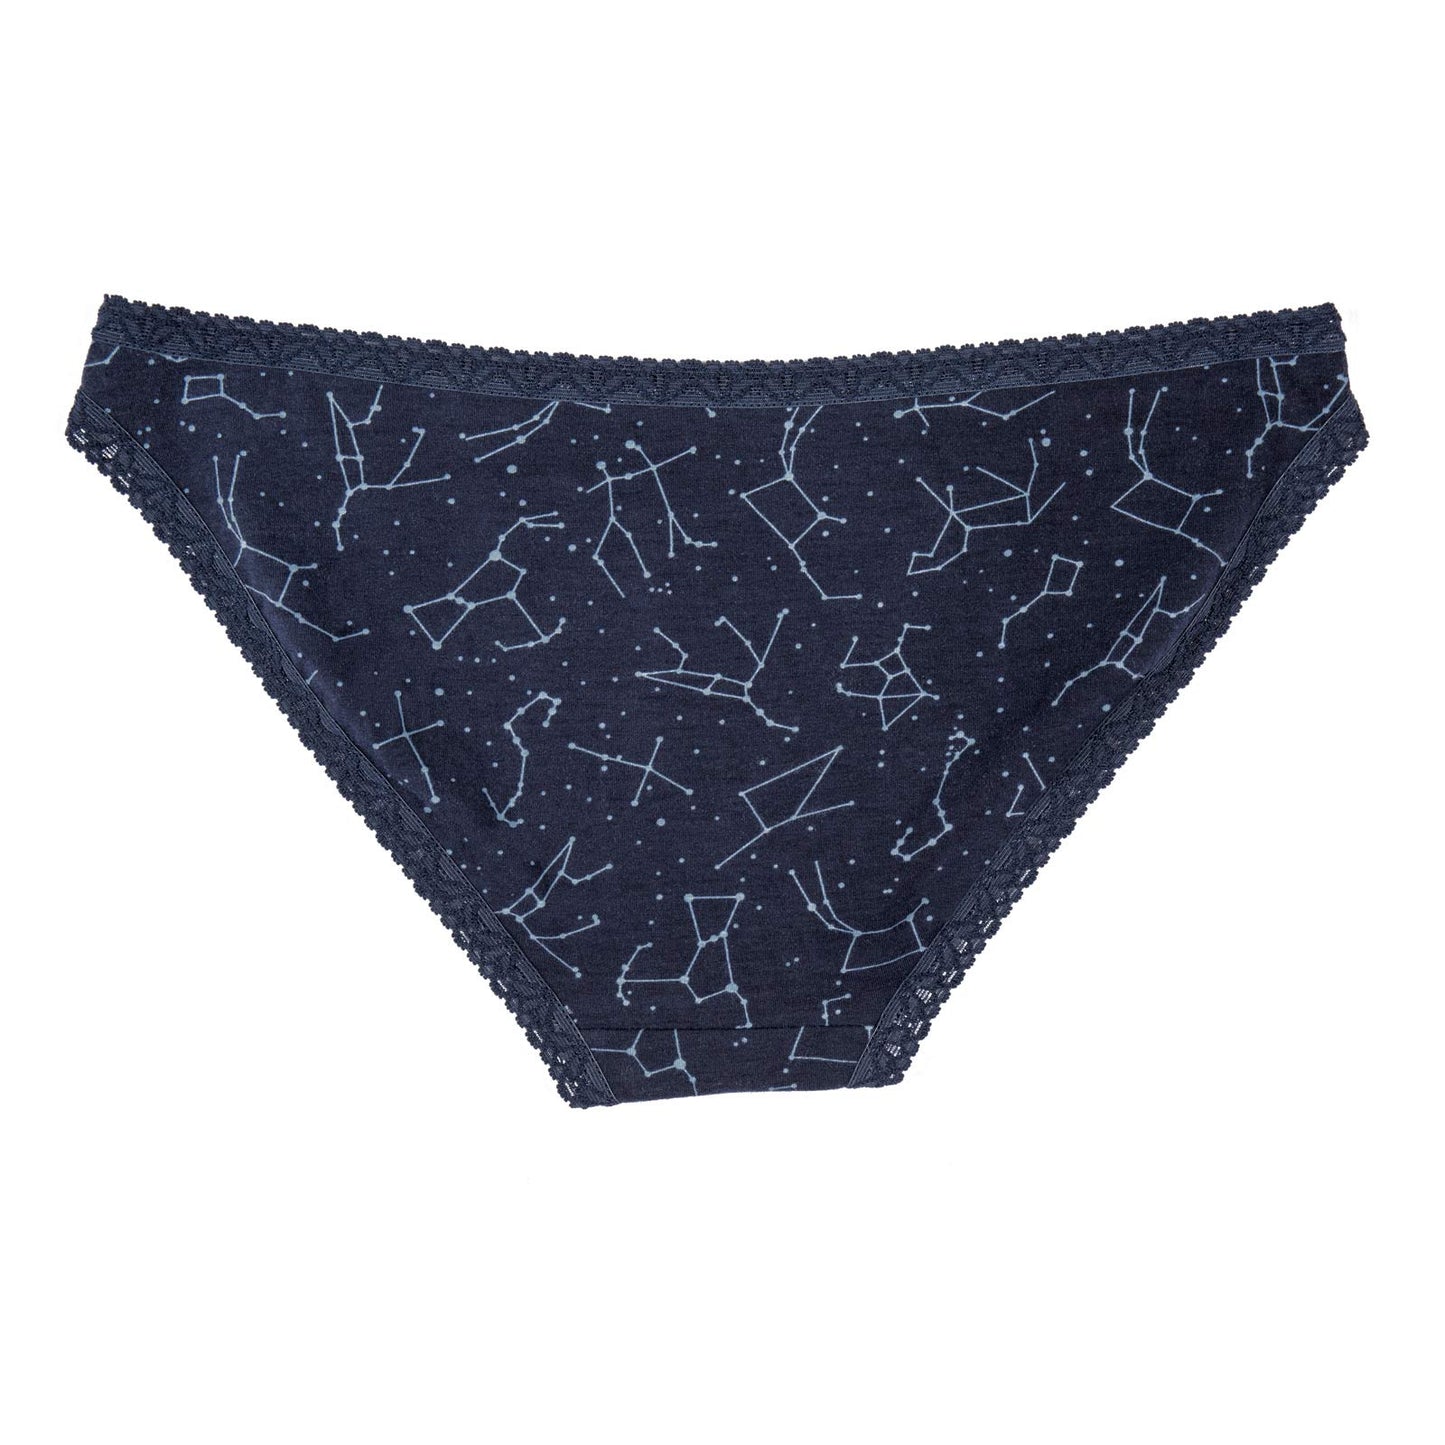 Sock It To Me Women's Underwear - Constellation - Large